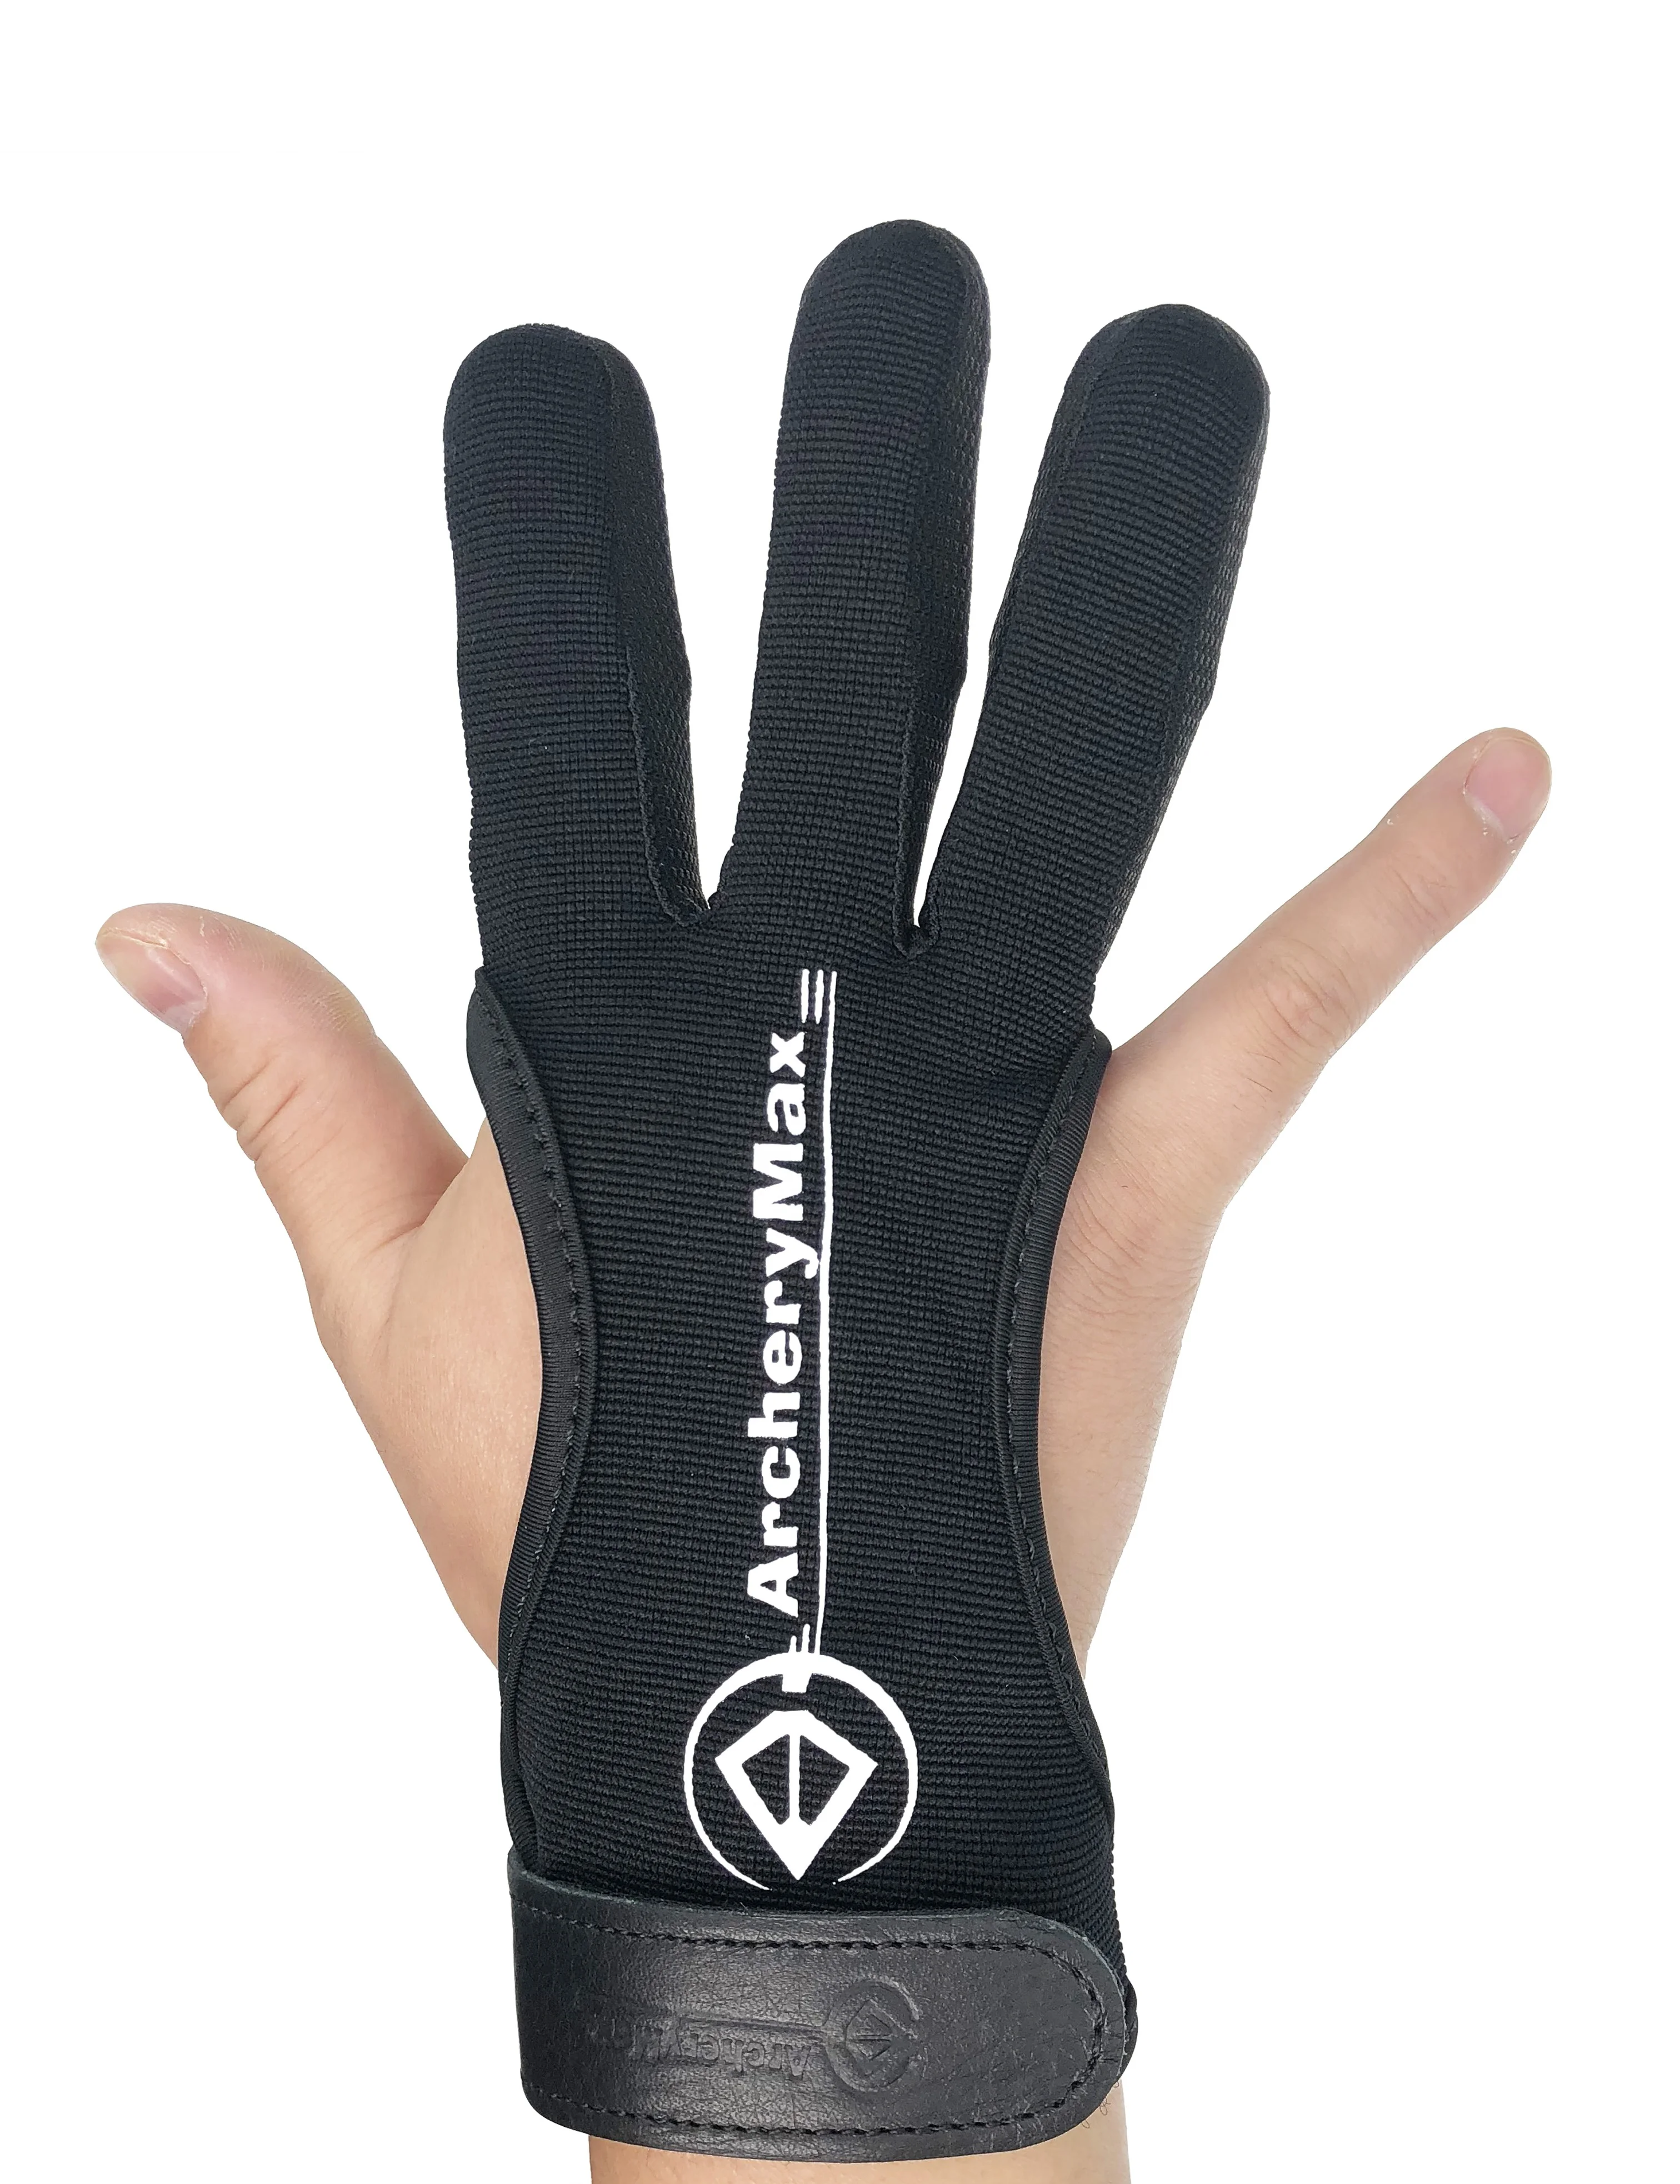 YOPOTIKA 1 pieza ajustable 3 dedos guante protector accesorio para tiro con arco recurvo tiro con arco